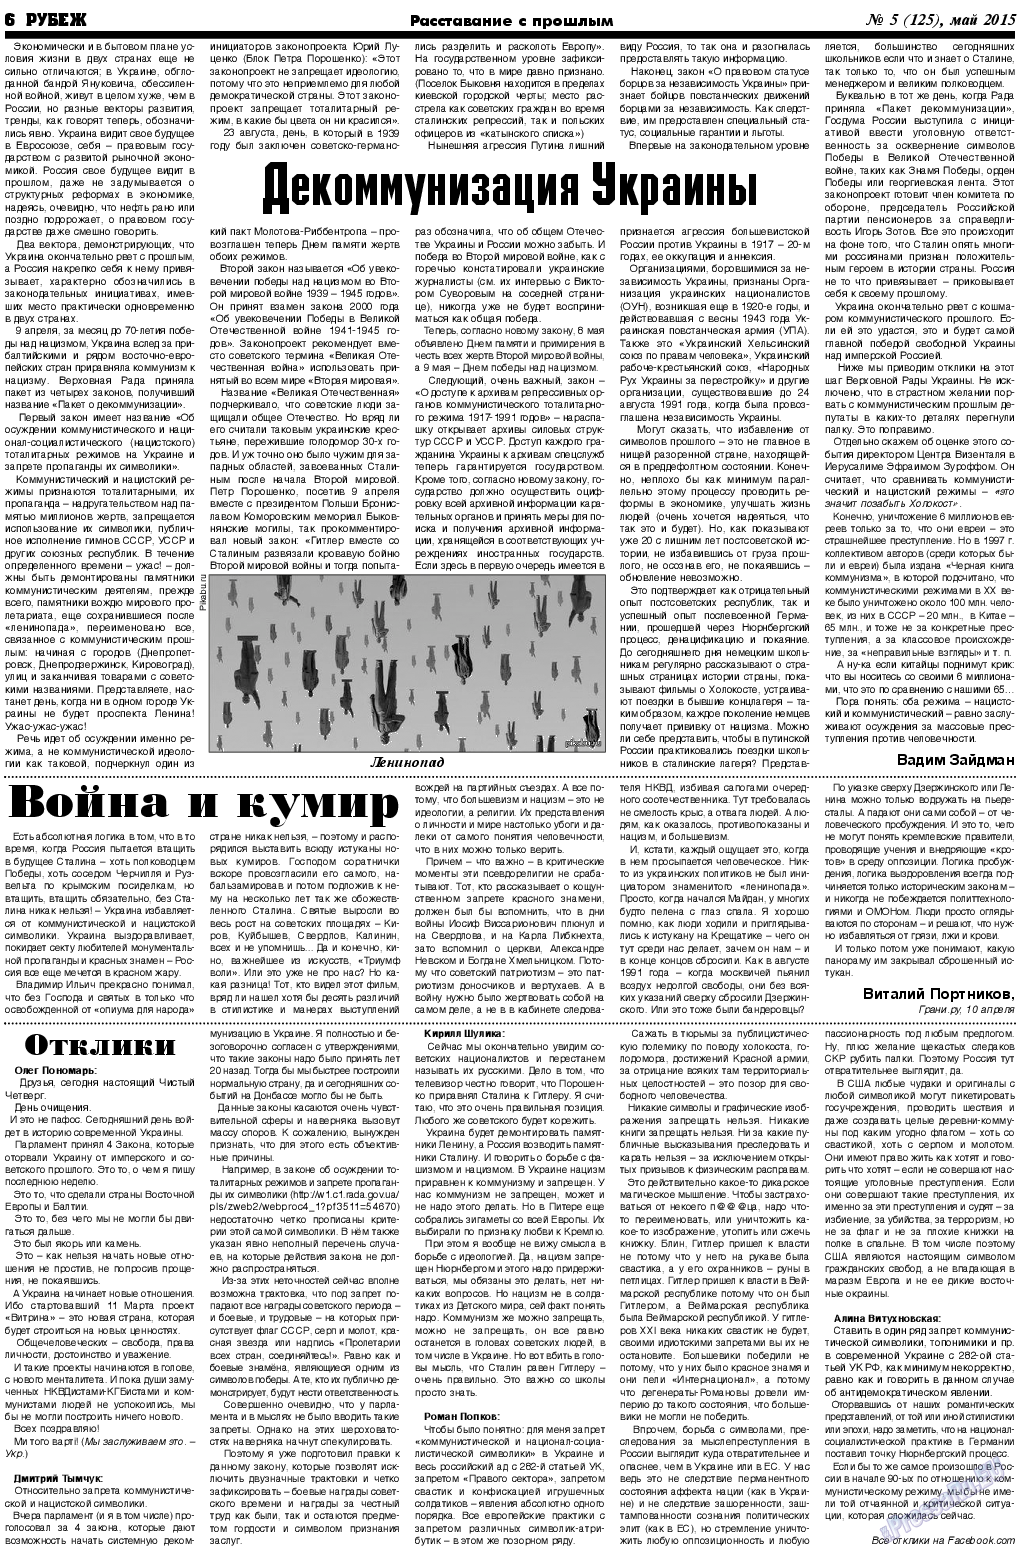 Рубеж, газета. 2015 №5 стр.6